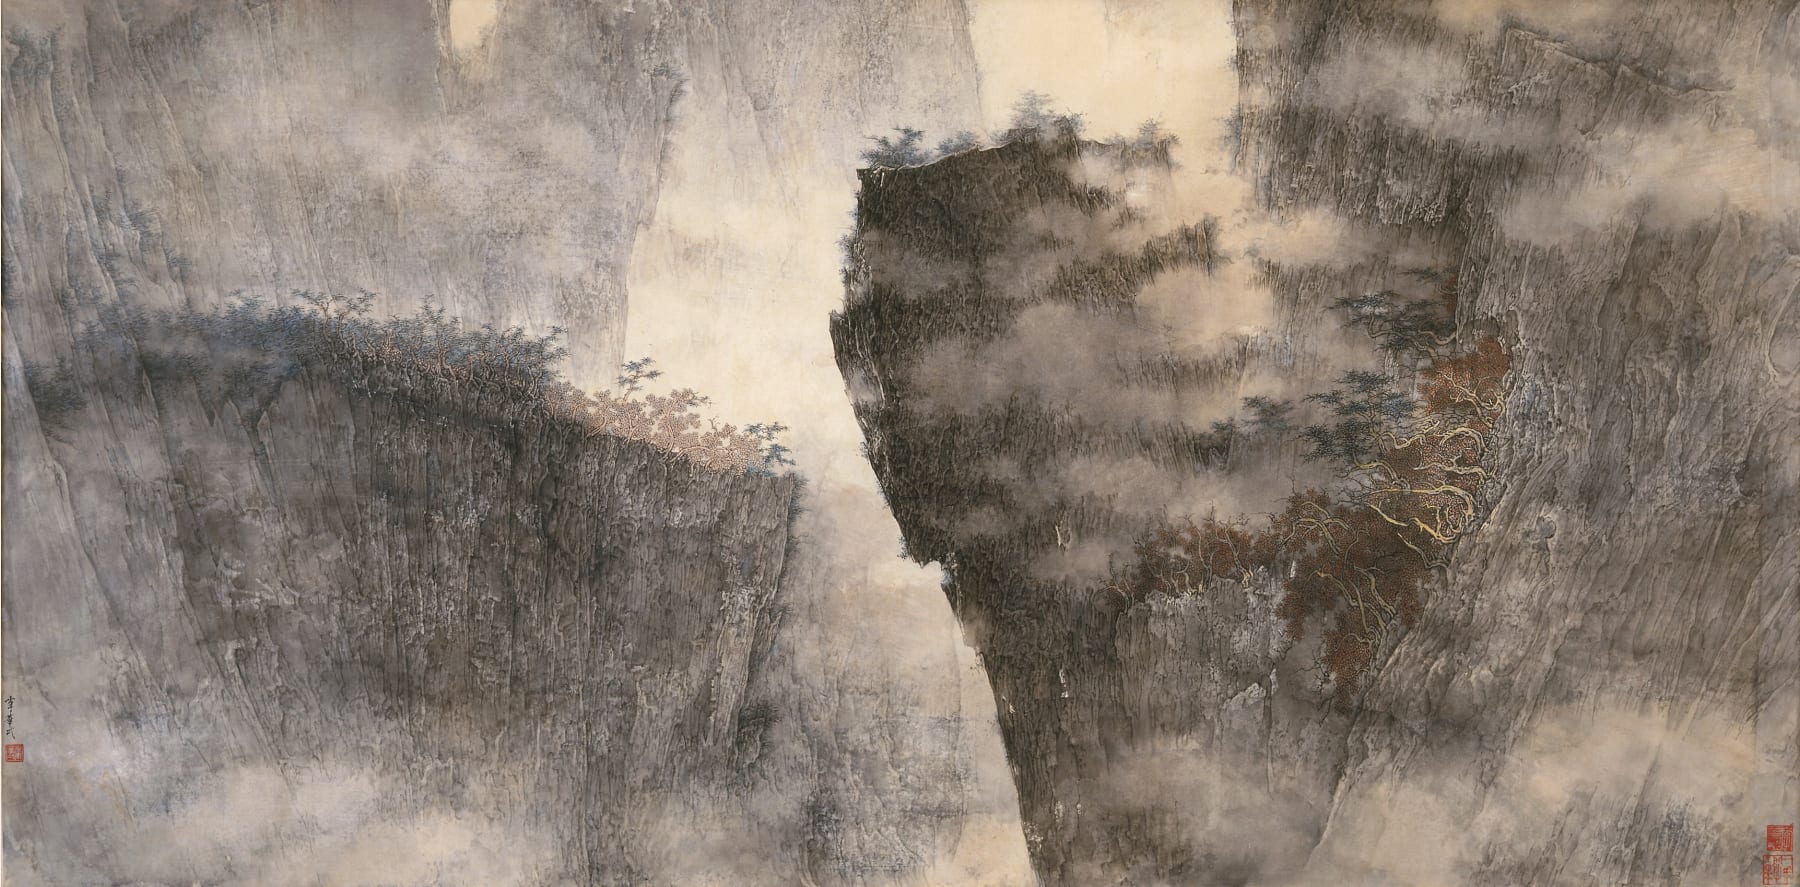 Li Huayi 李華弌, Chasm in Mist《顛岩雲脈》, 2007